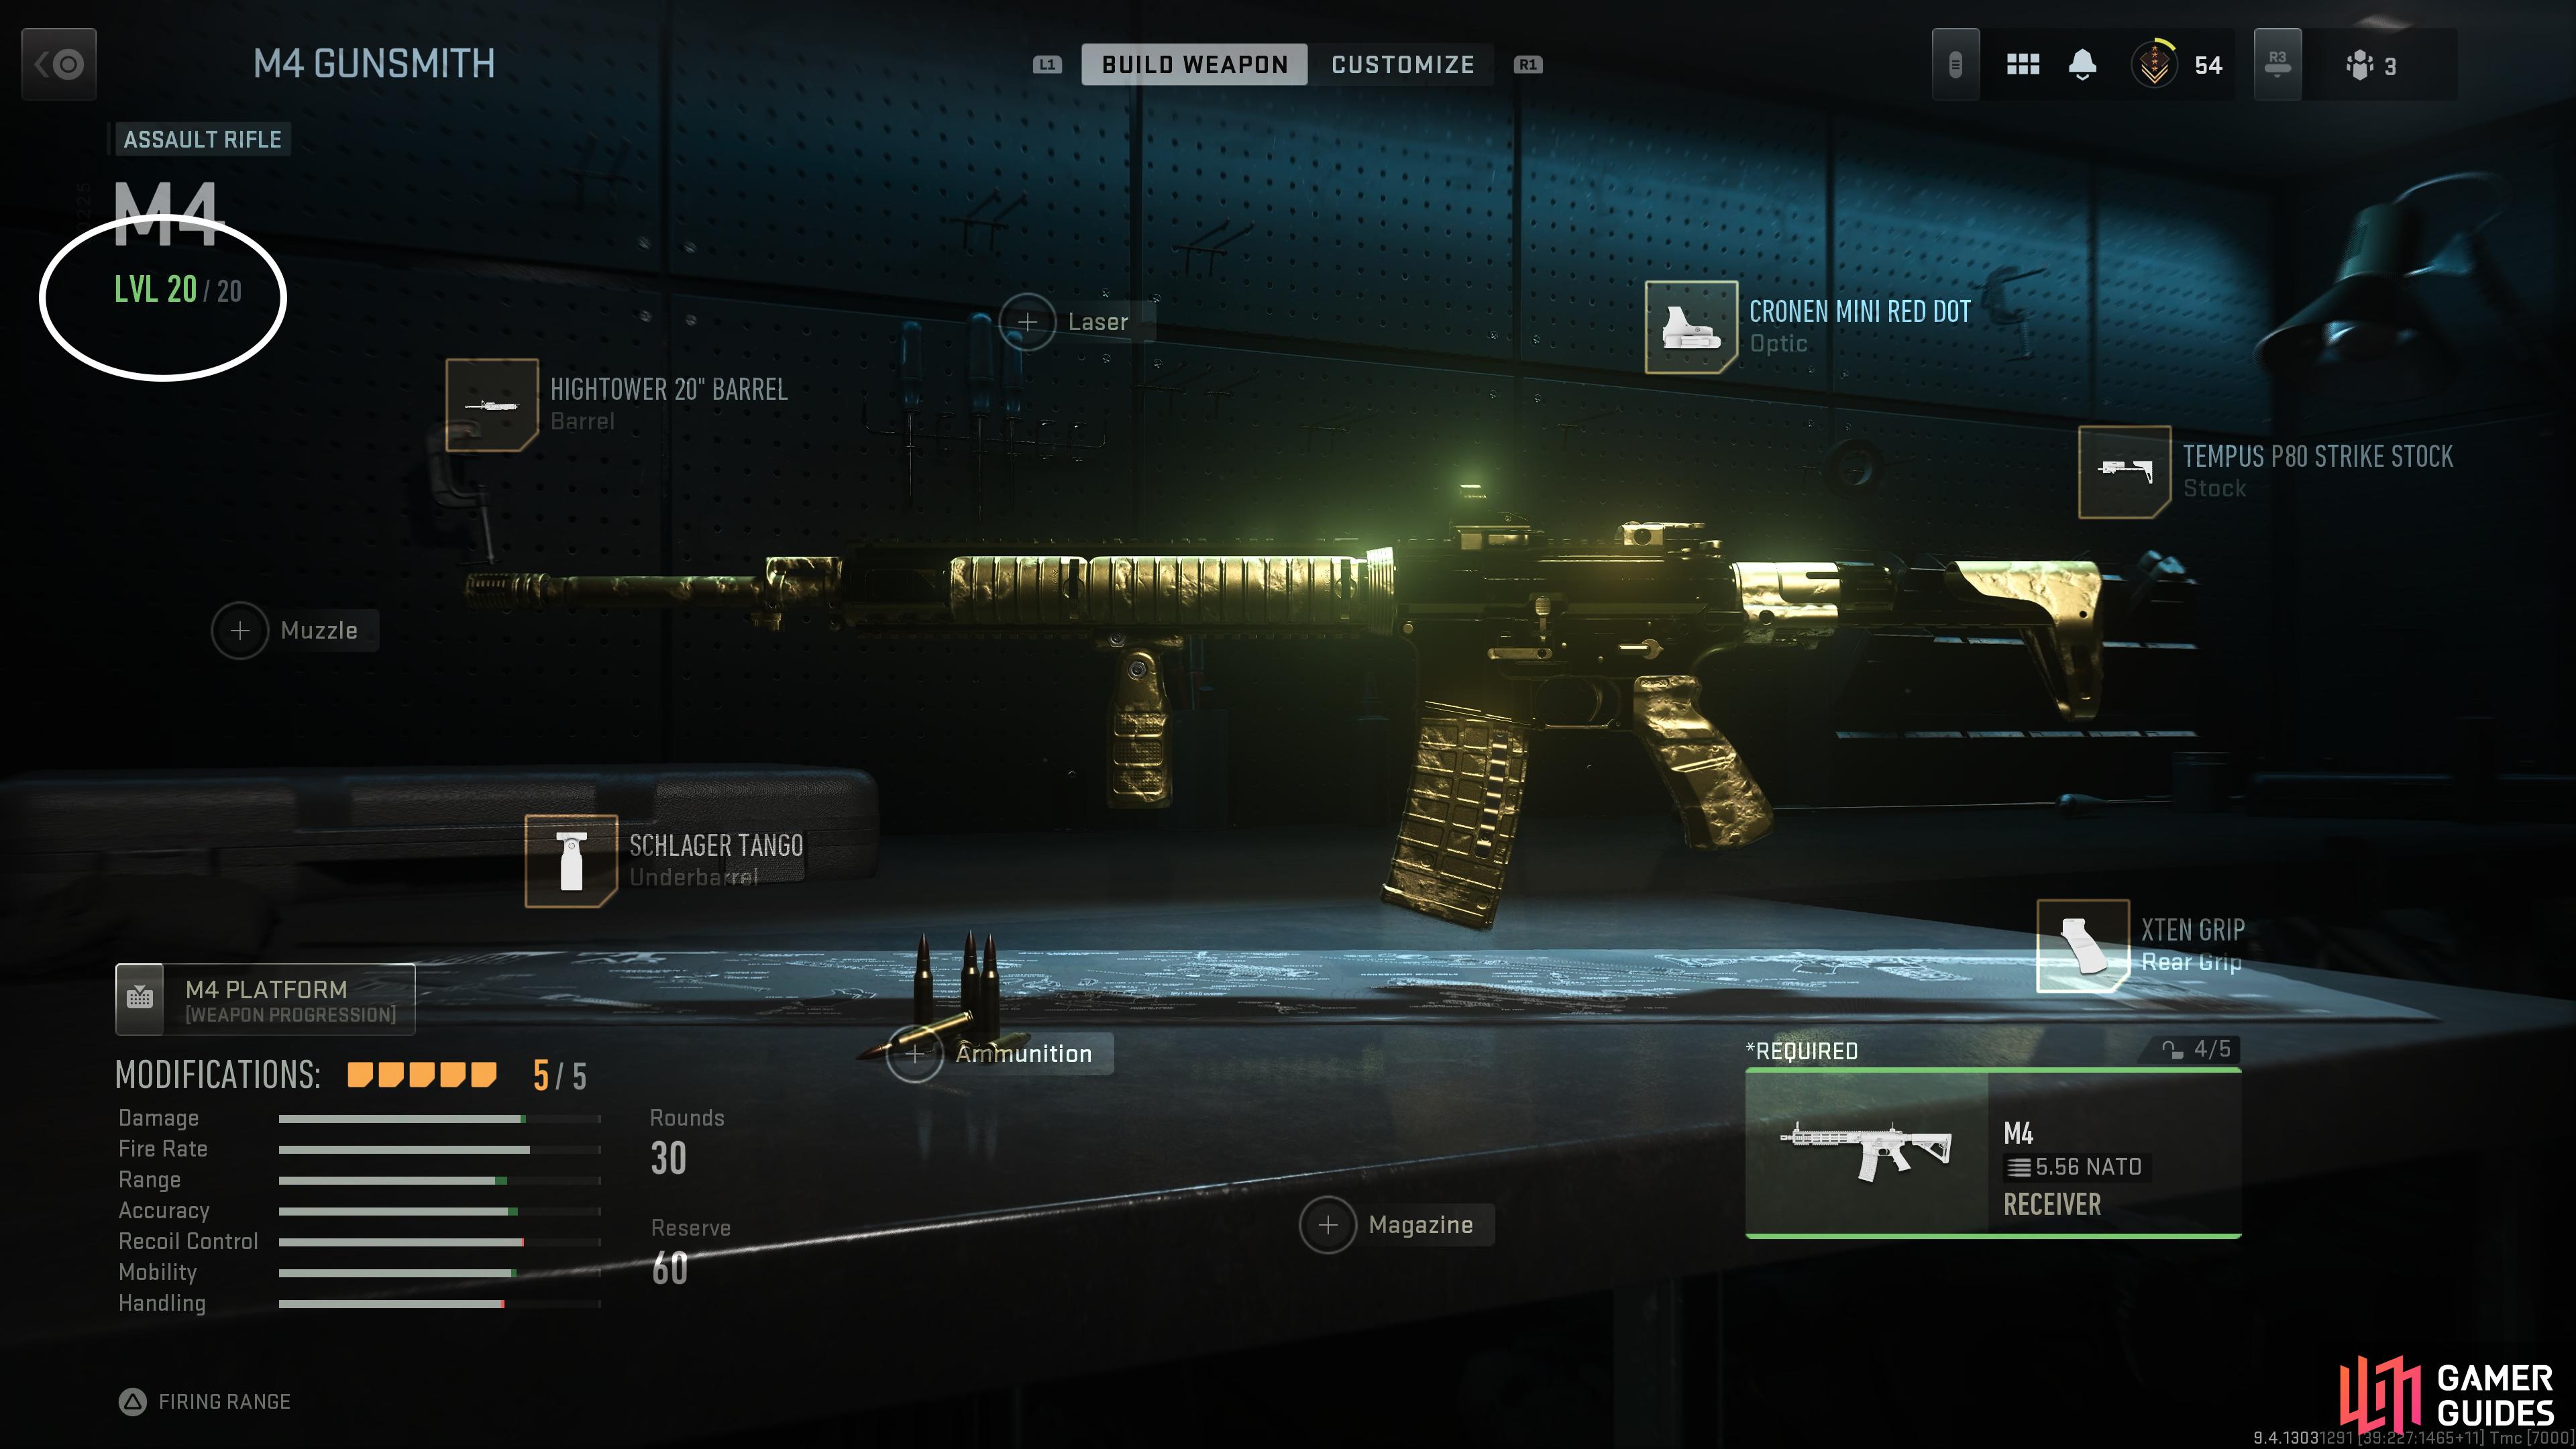 🔥Call of Duty Modern Warfare II 2 5 Hours Double XP Token Codes! INSTANT!